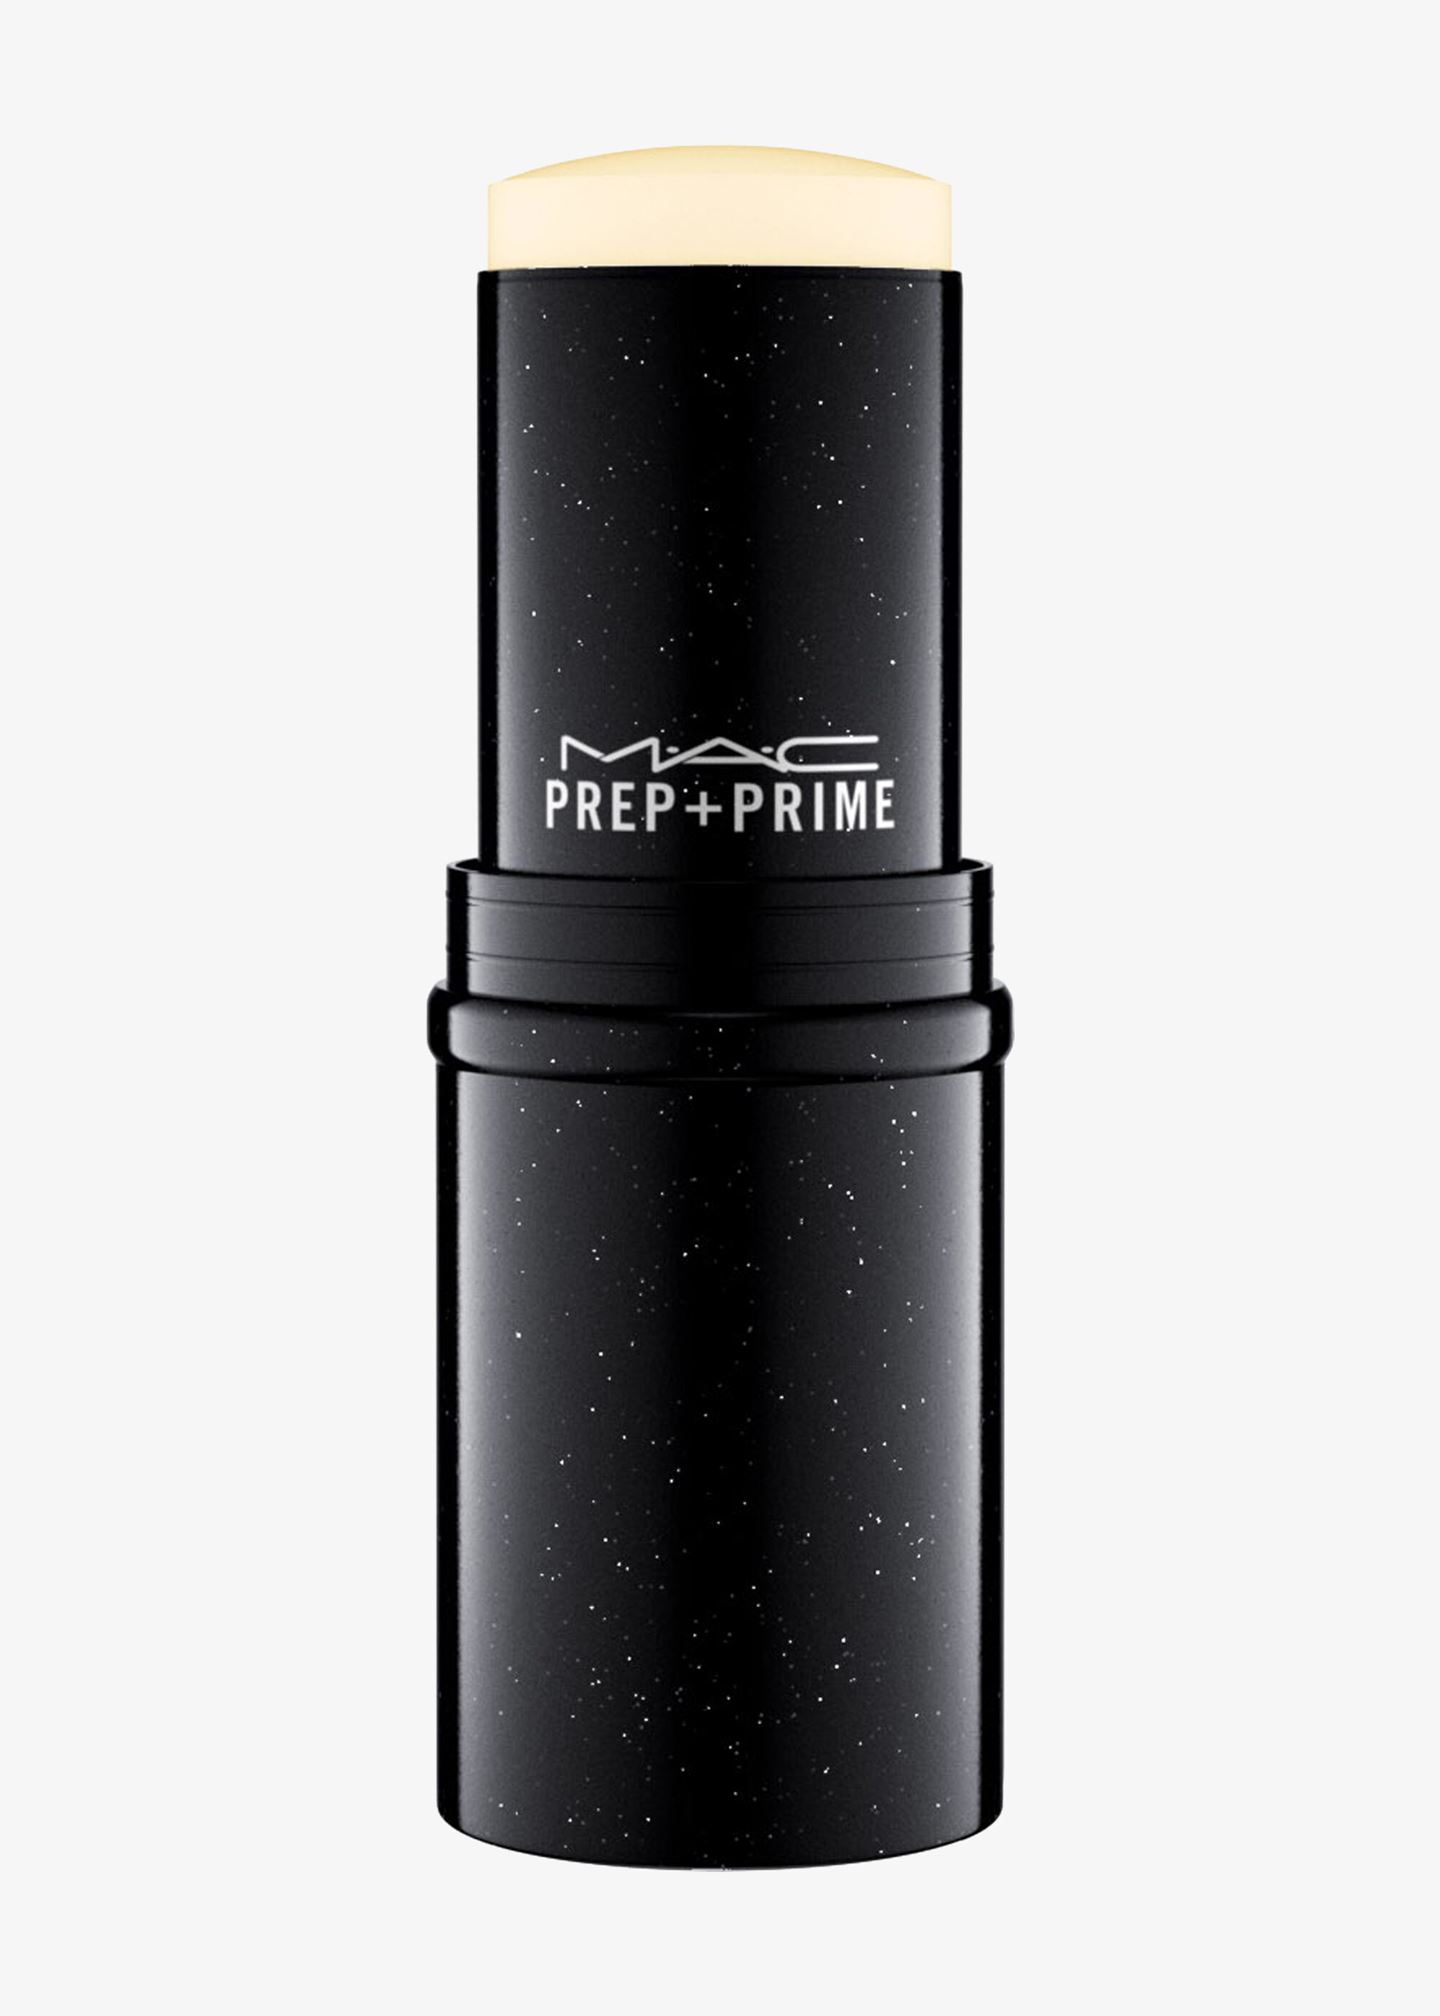 Prep+Prime «Essential Oils Stick»